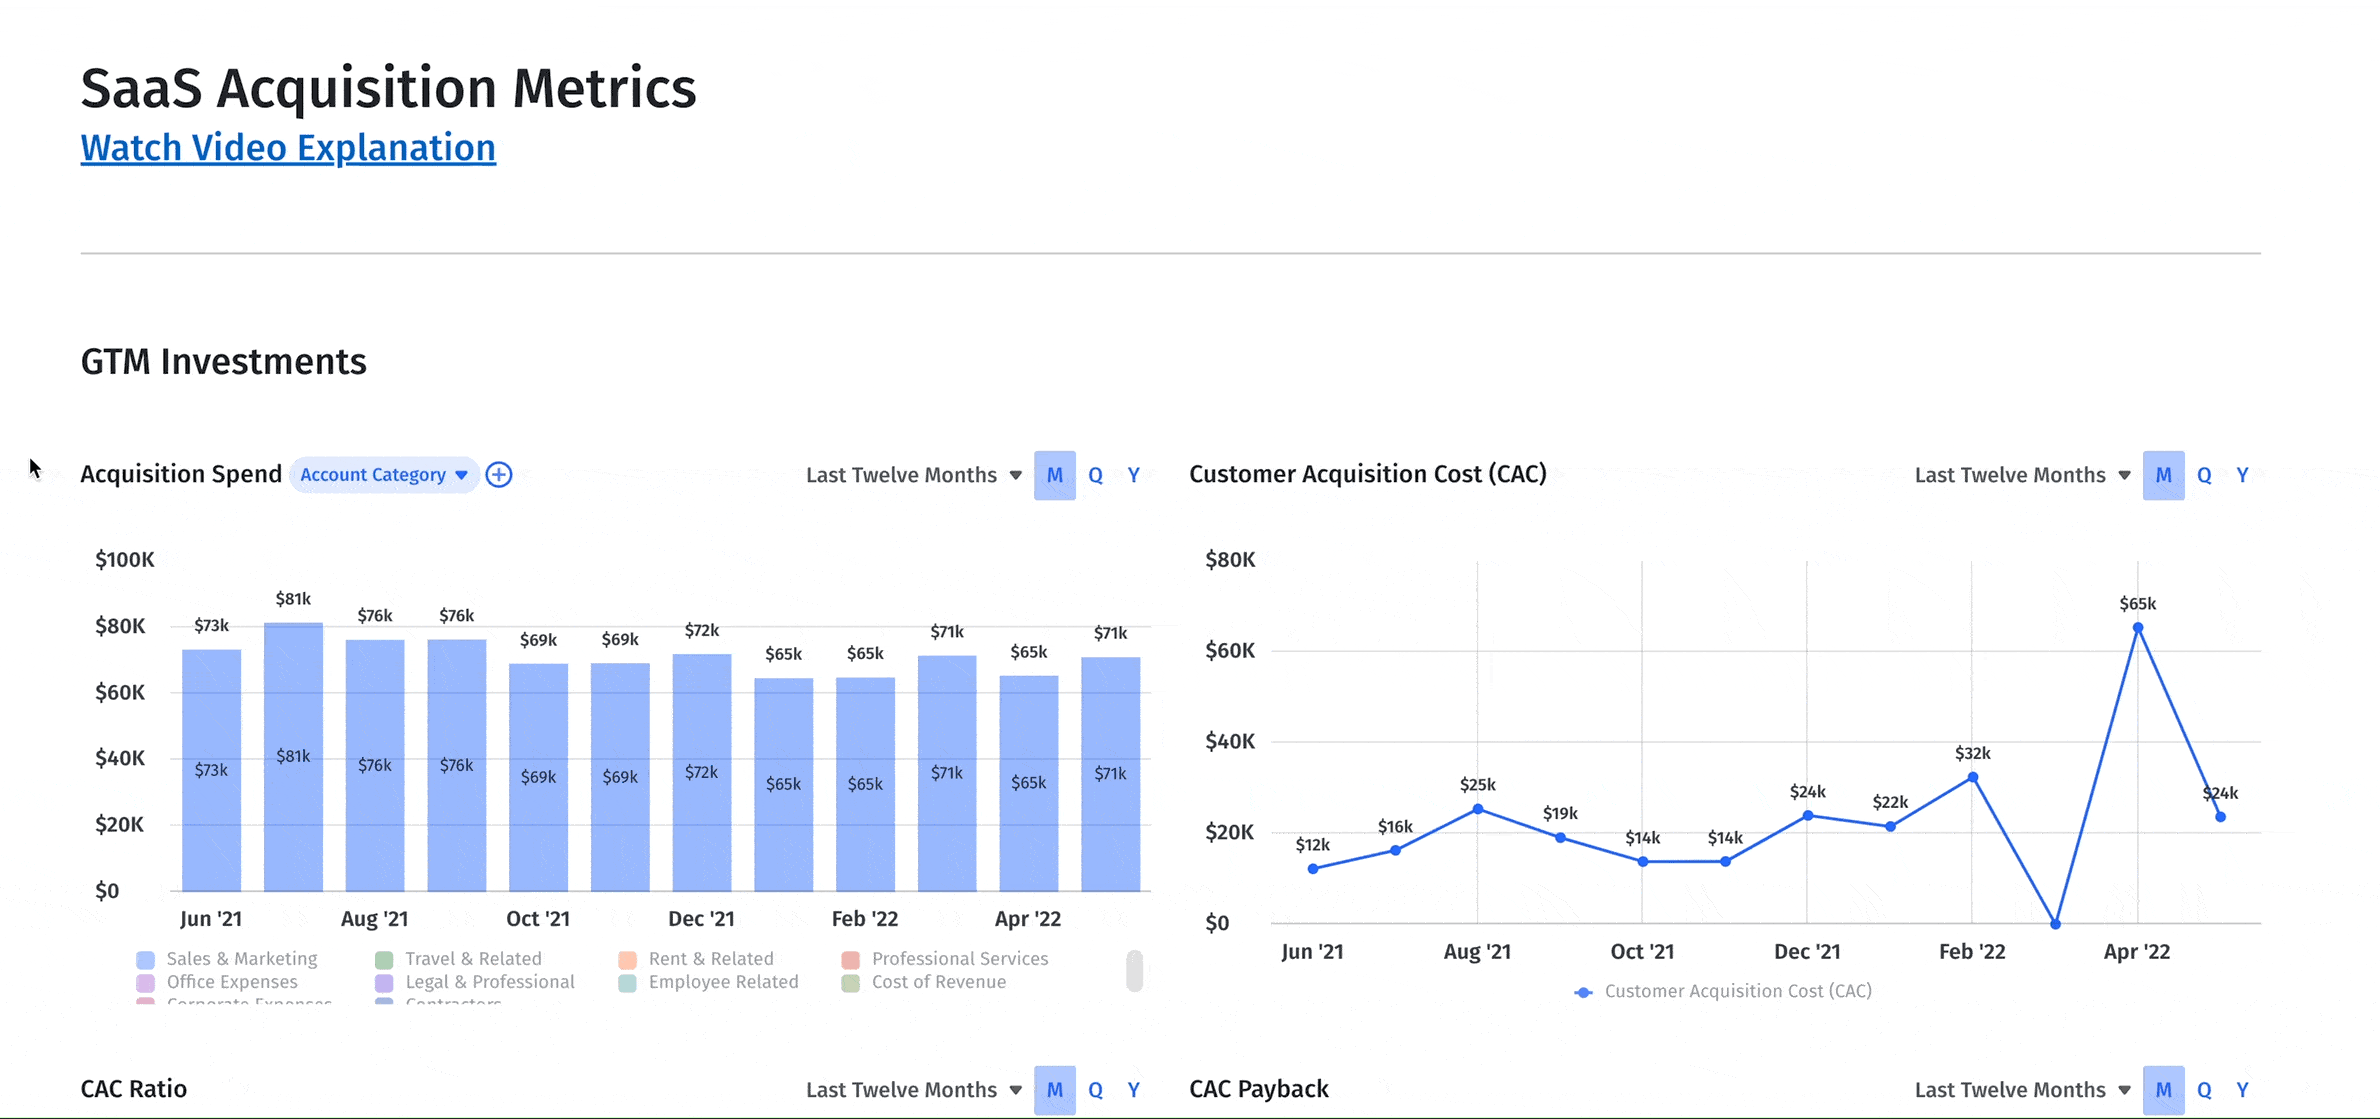 saas acquisition metrics dashboard in Mosaic